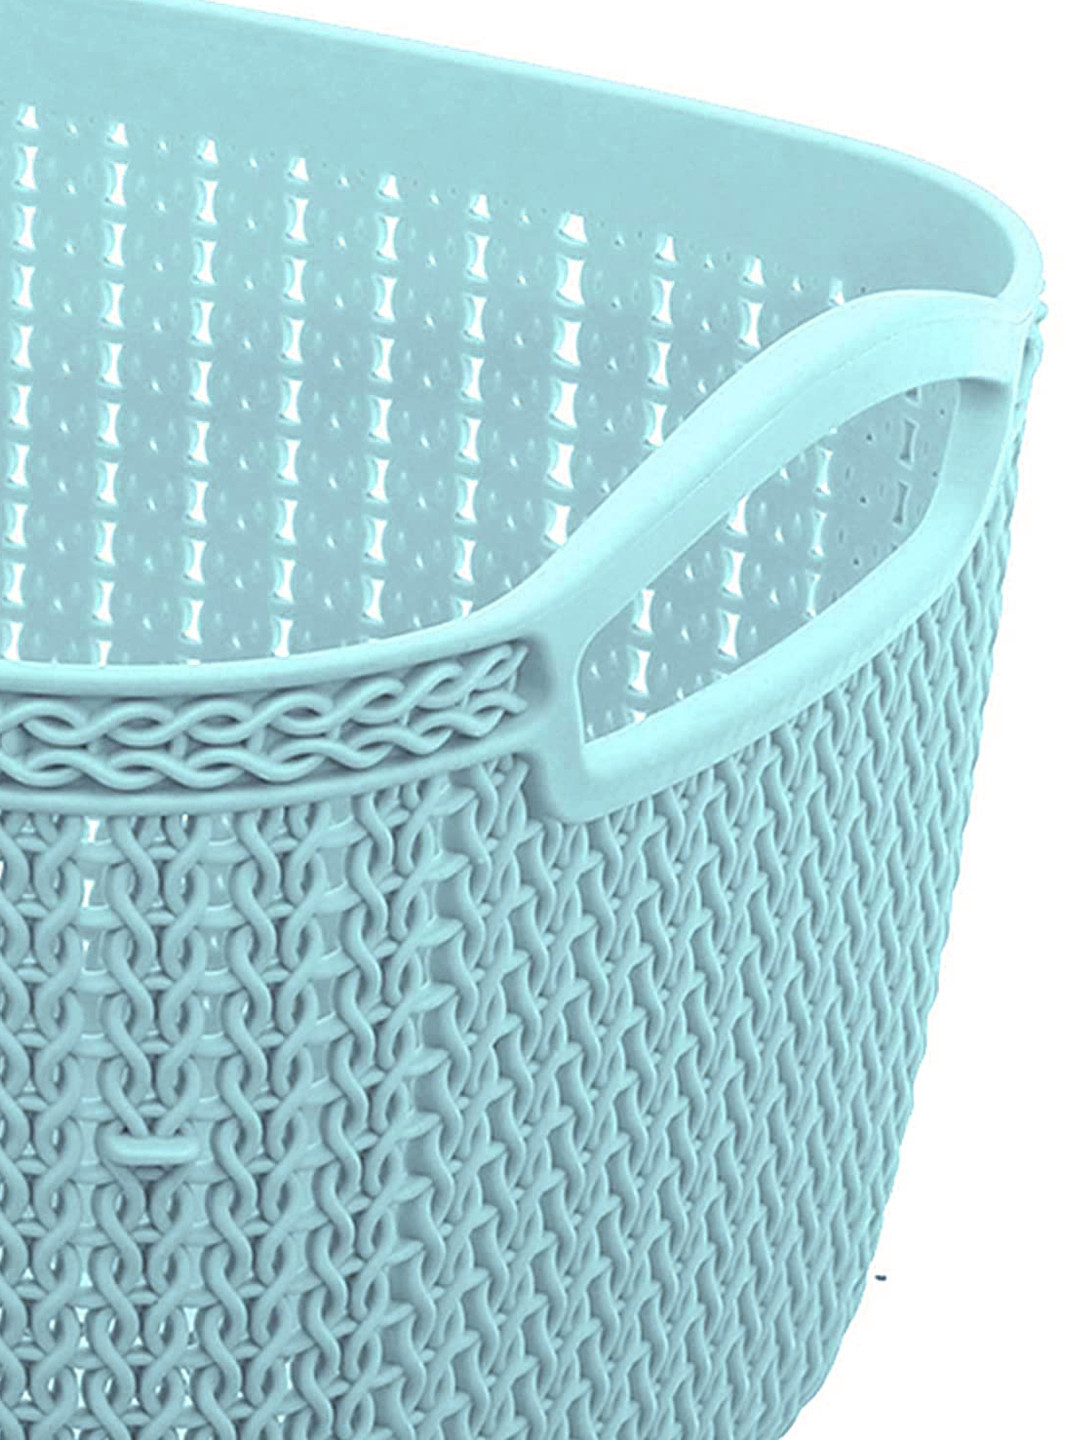 Kuber Industries Q-5,6 Unbreakable Plastic Multipurpose Large & Medium Size Flexible Storage Baskets/Fruit Vegetable Bathroom Stationary Home Basket with Handles (Light Blue)